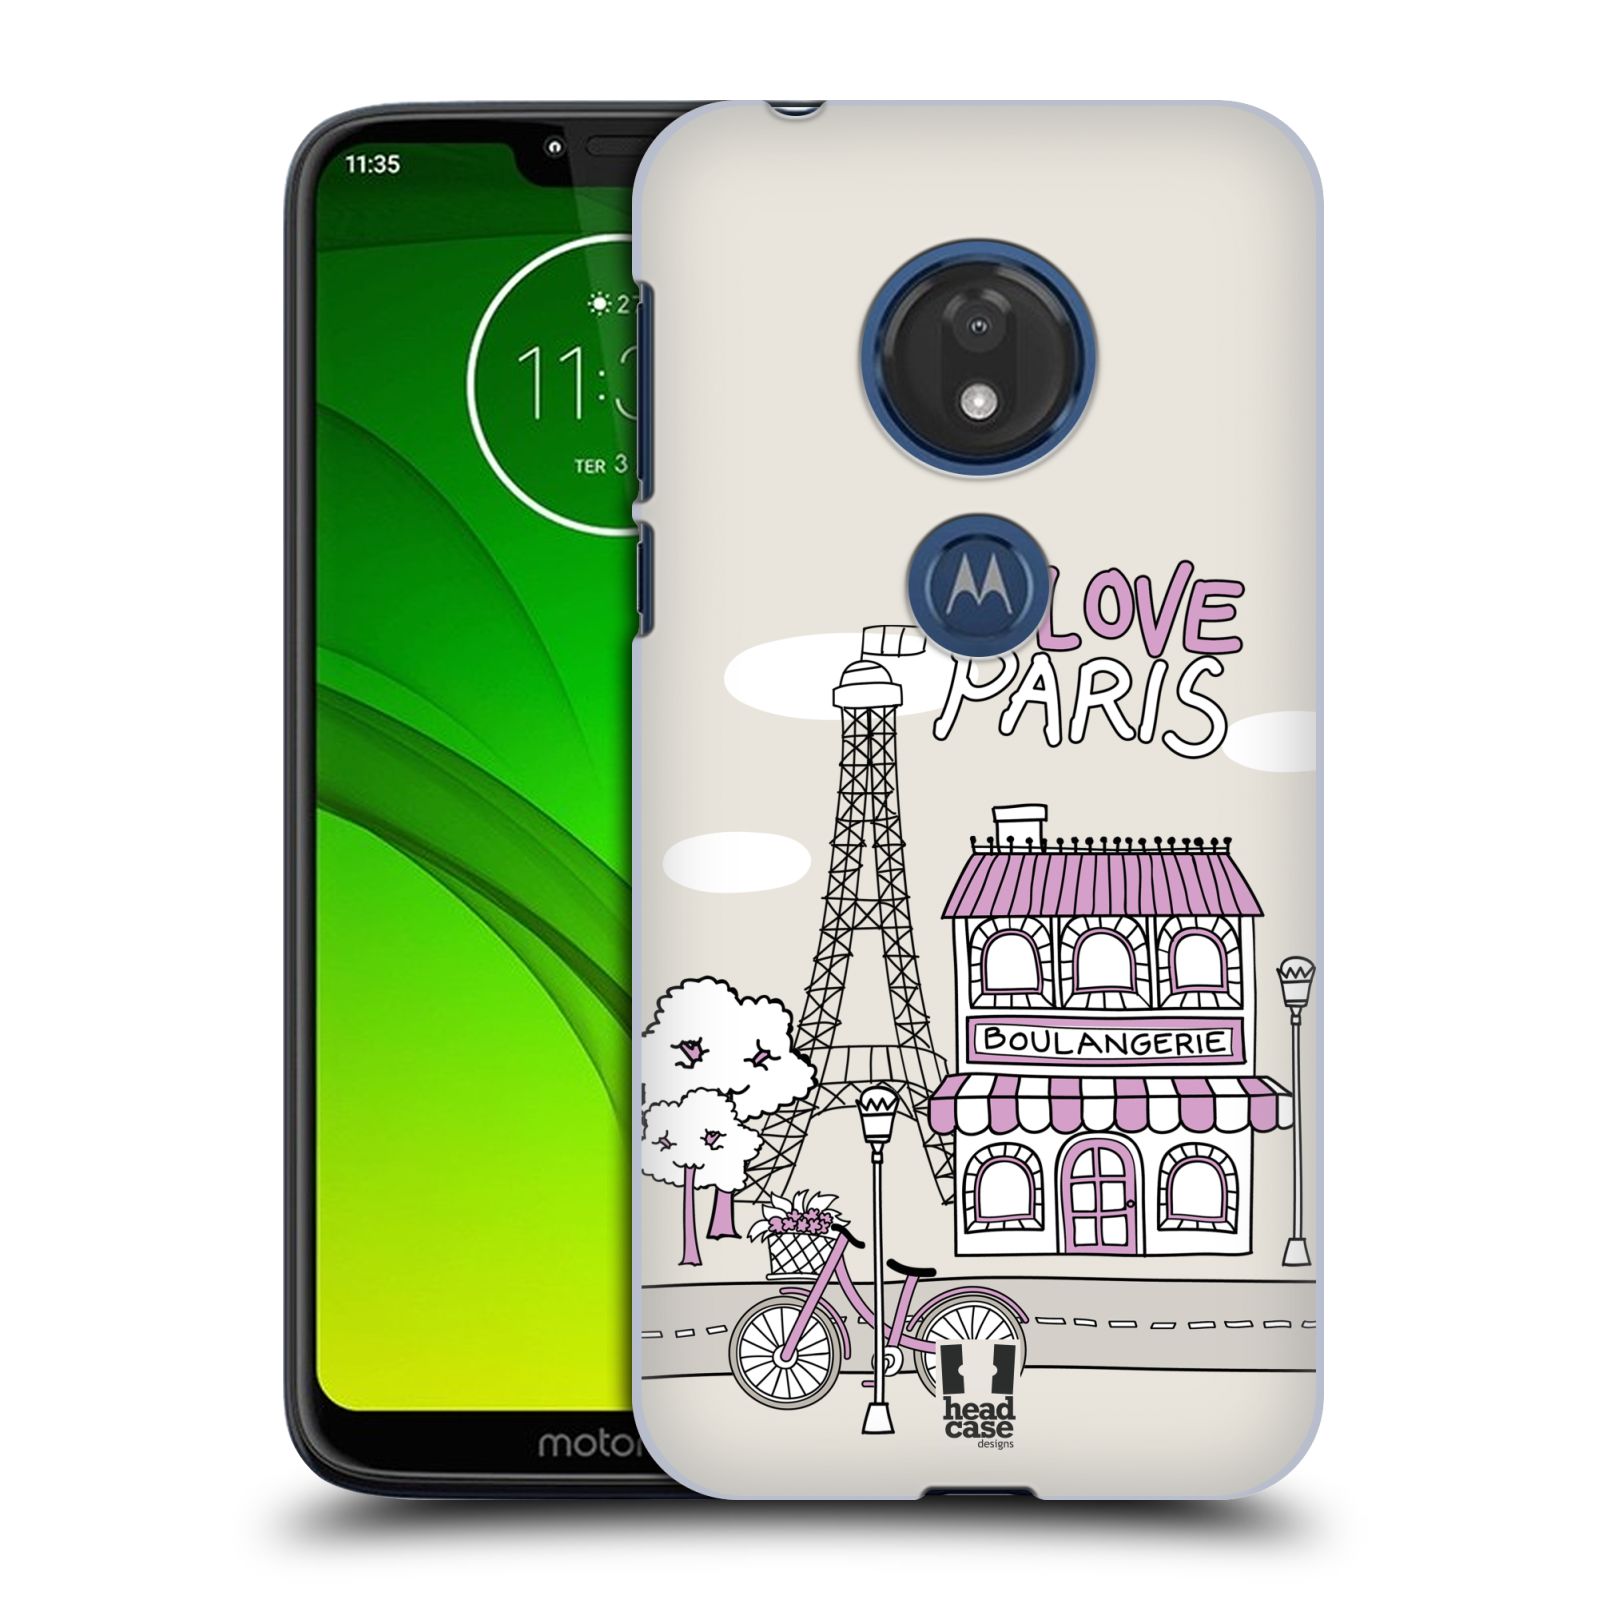 Pouzdro na mobil Motorola Moto G7 Play vzor Kreslená městečka FIALOVÁ, Paříž, Francie, I LOVE PARIS